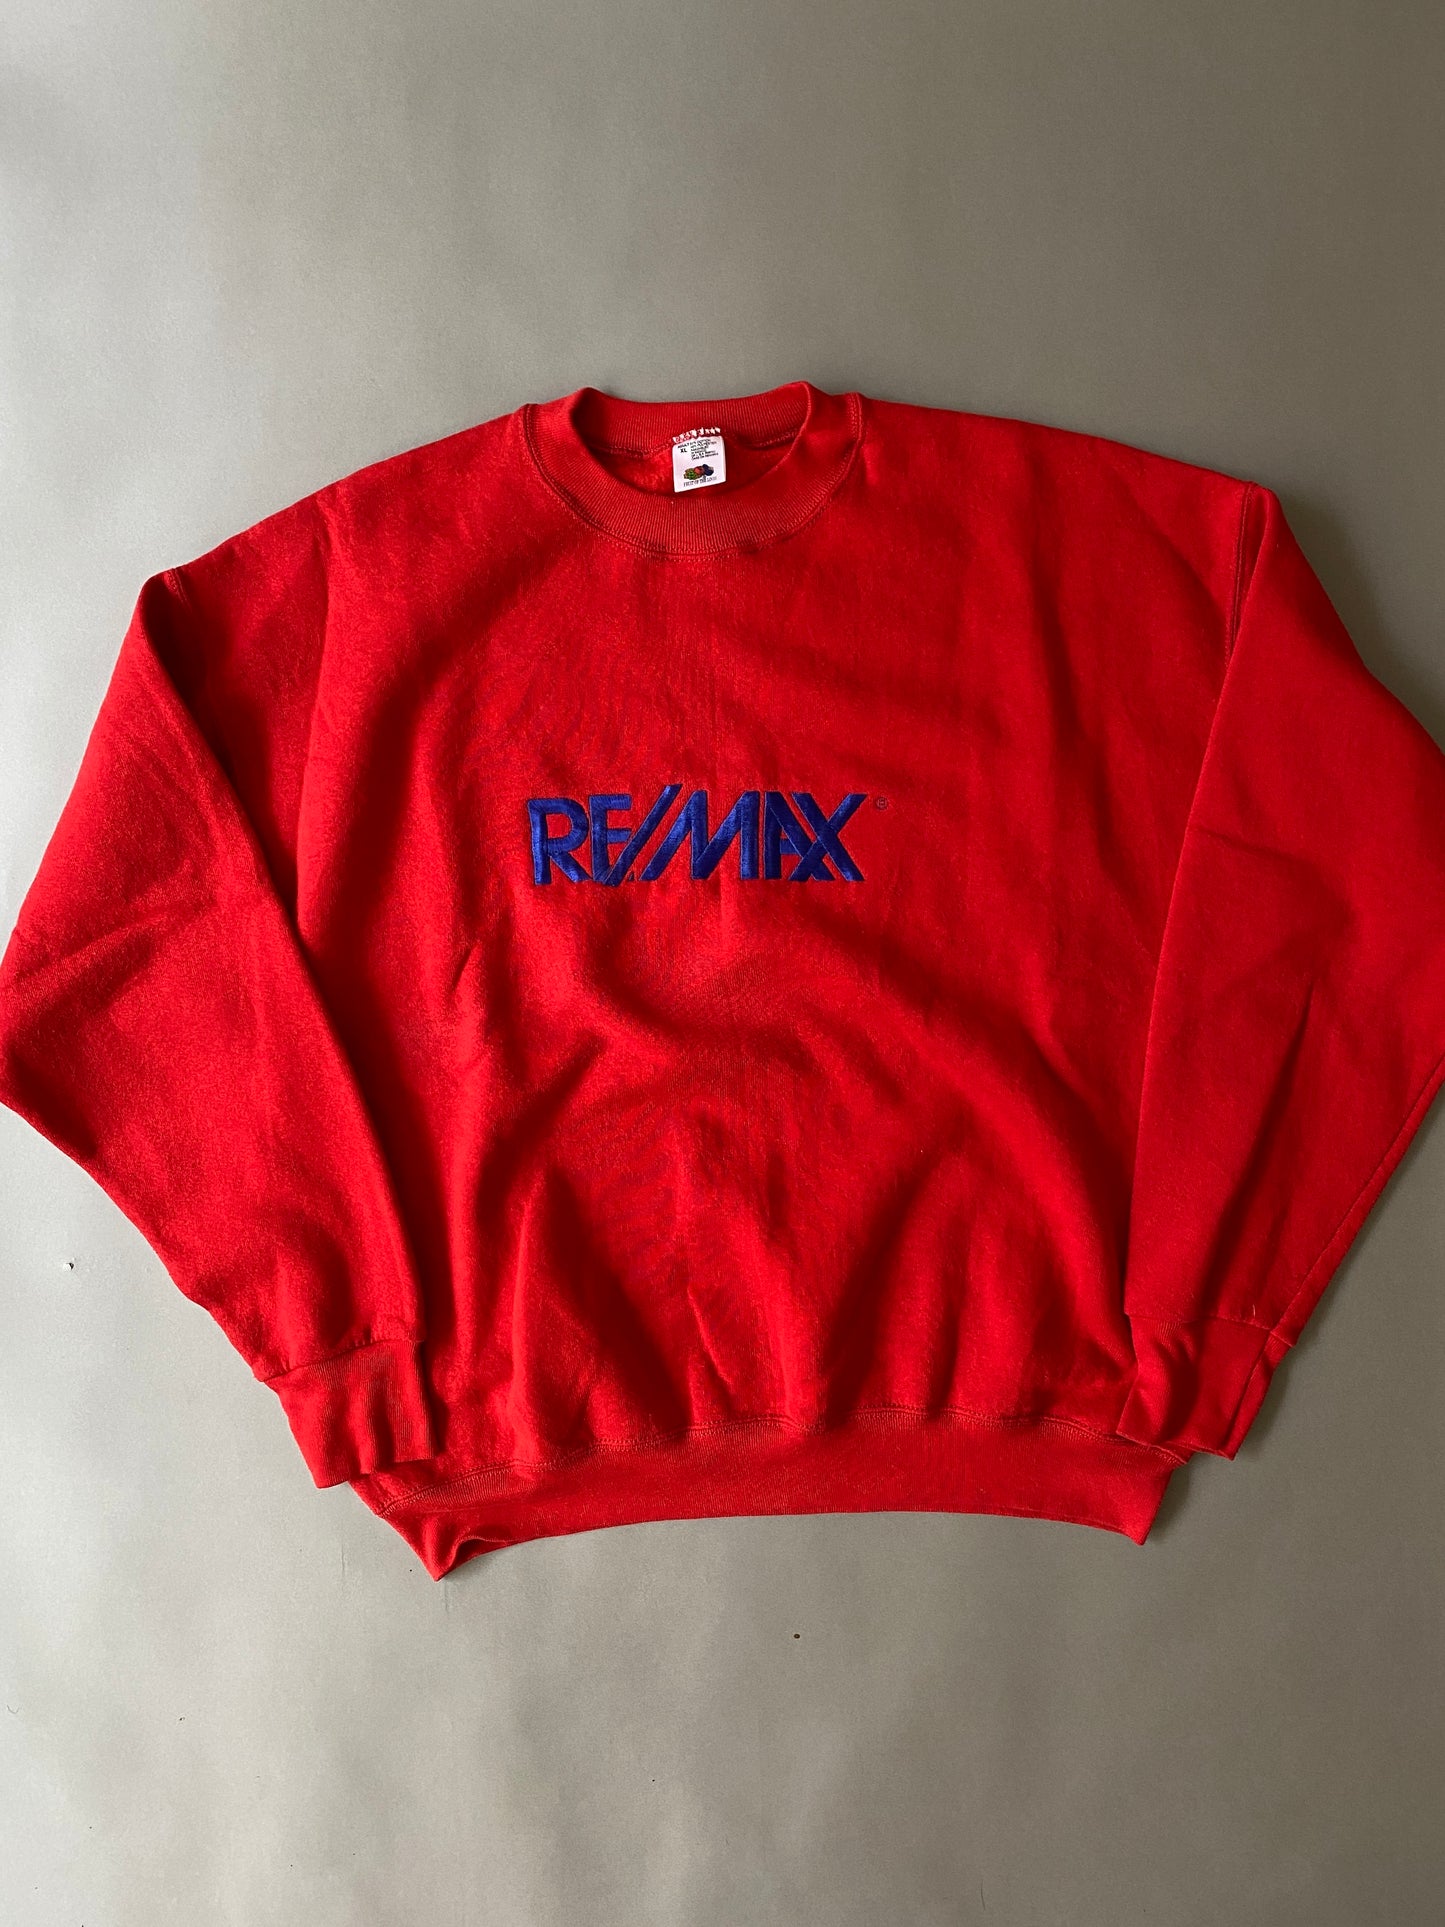 REMAX vintage sweatshirt